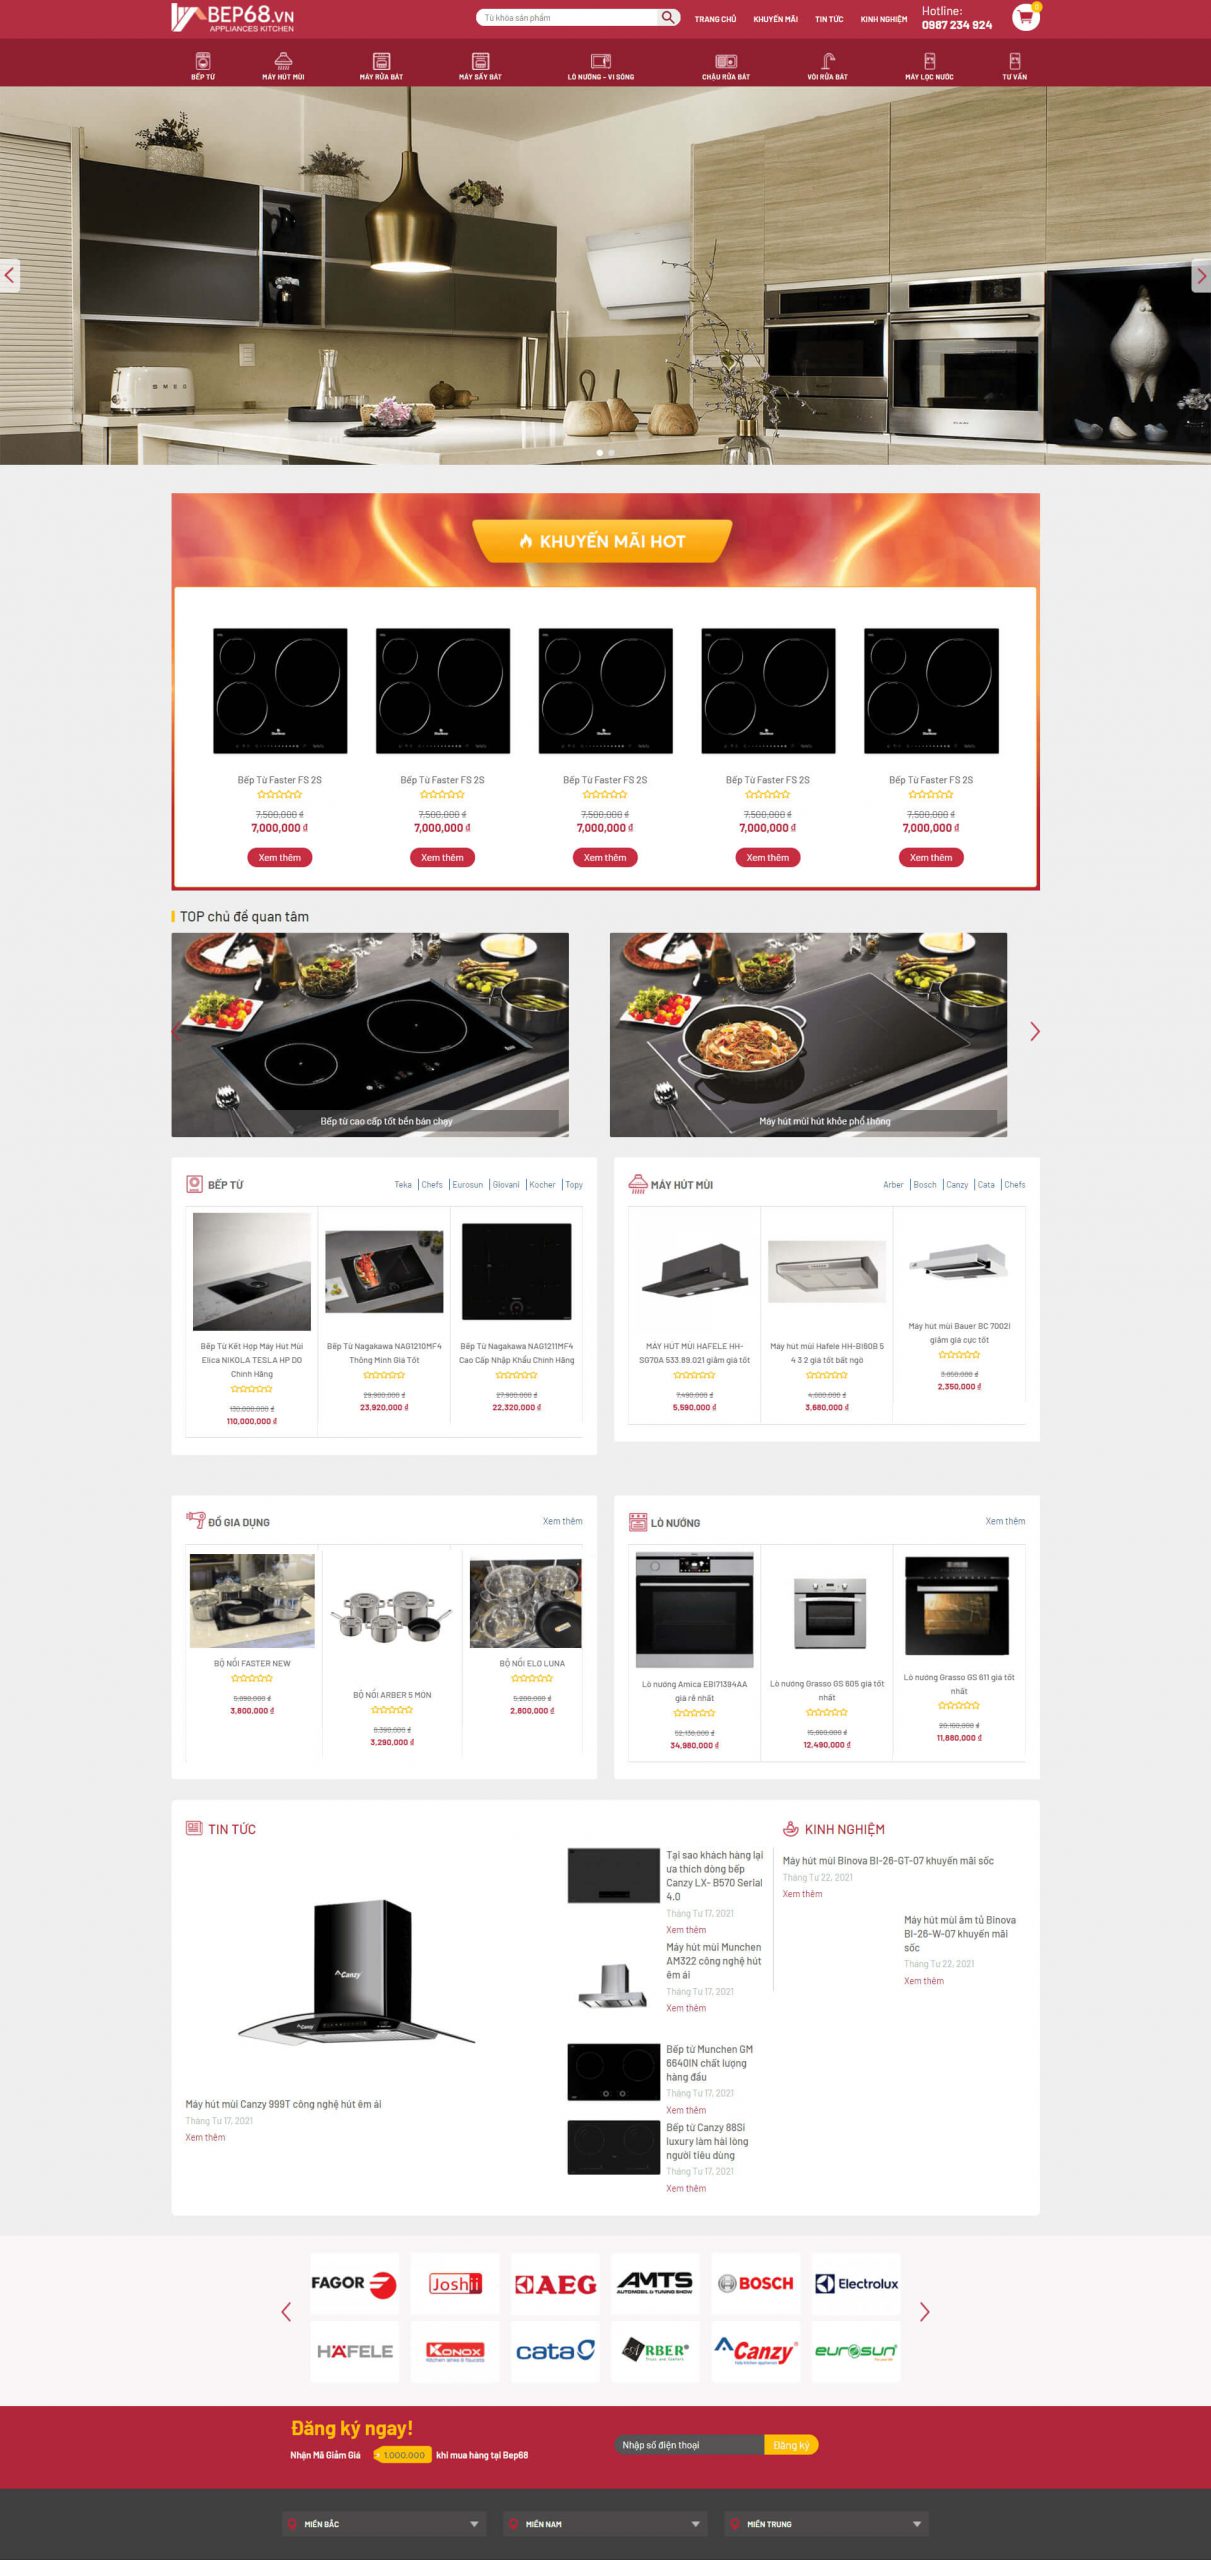 Thiết kế website ngành bếp – Bep68.com